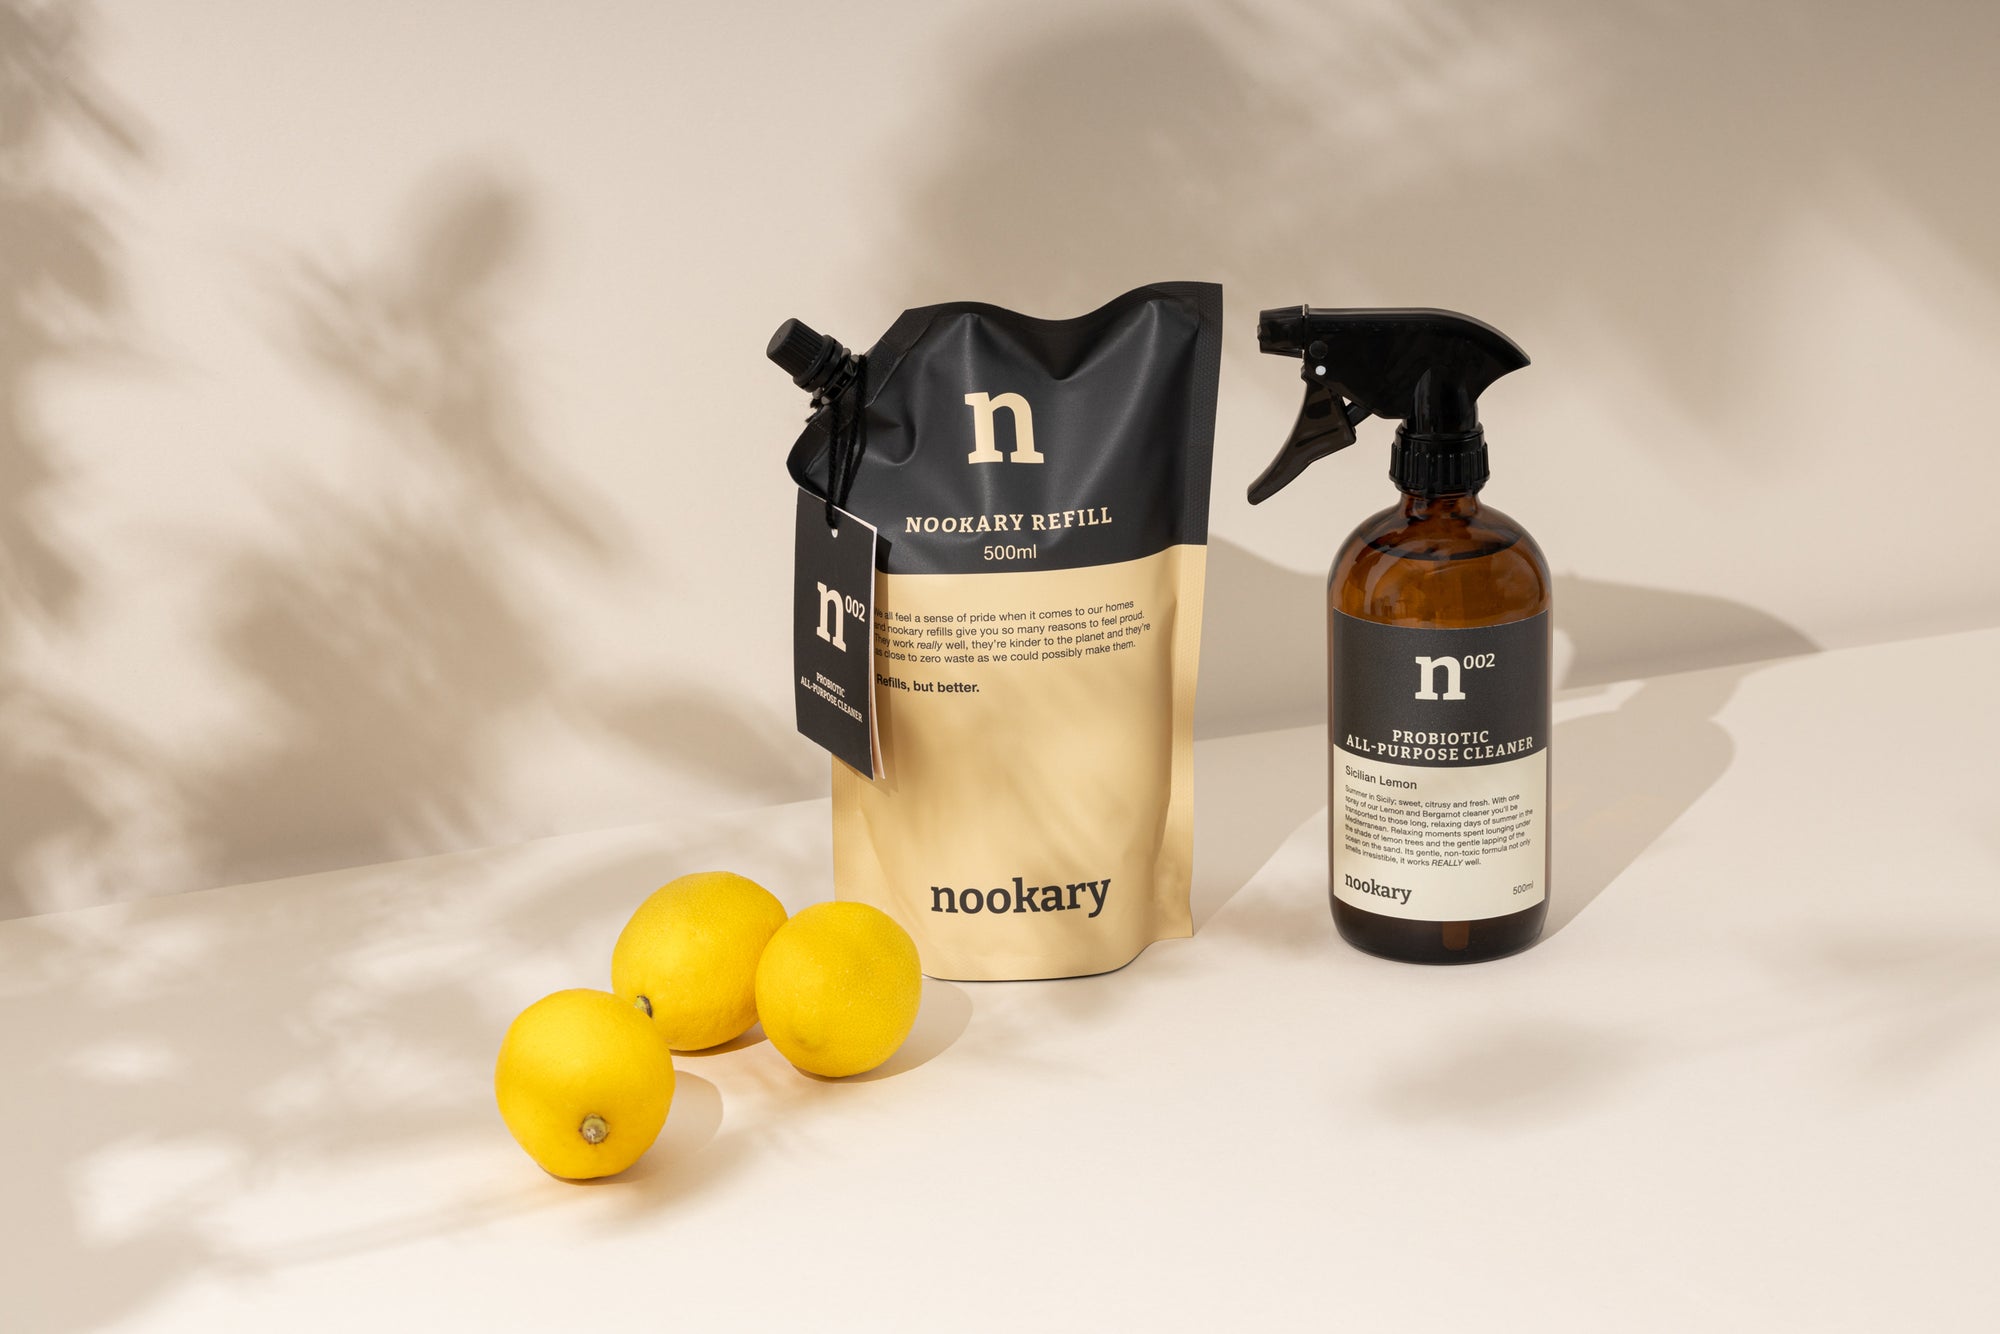 nookary probiotic all purpose cleaner in sicilian lemon